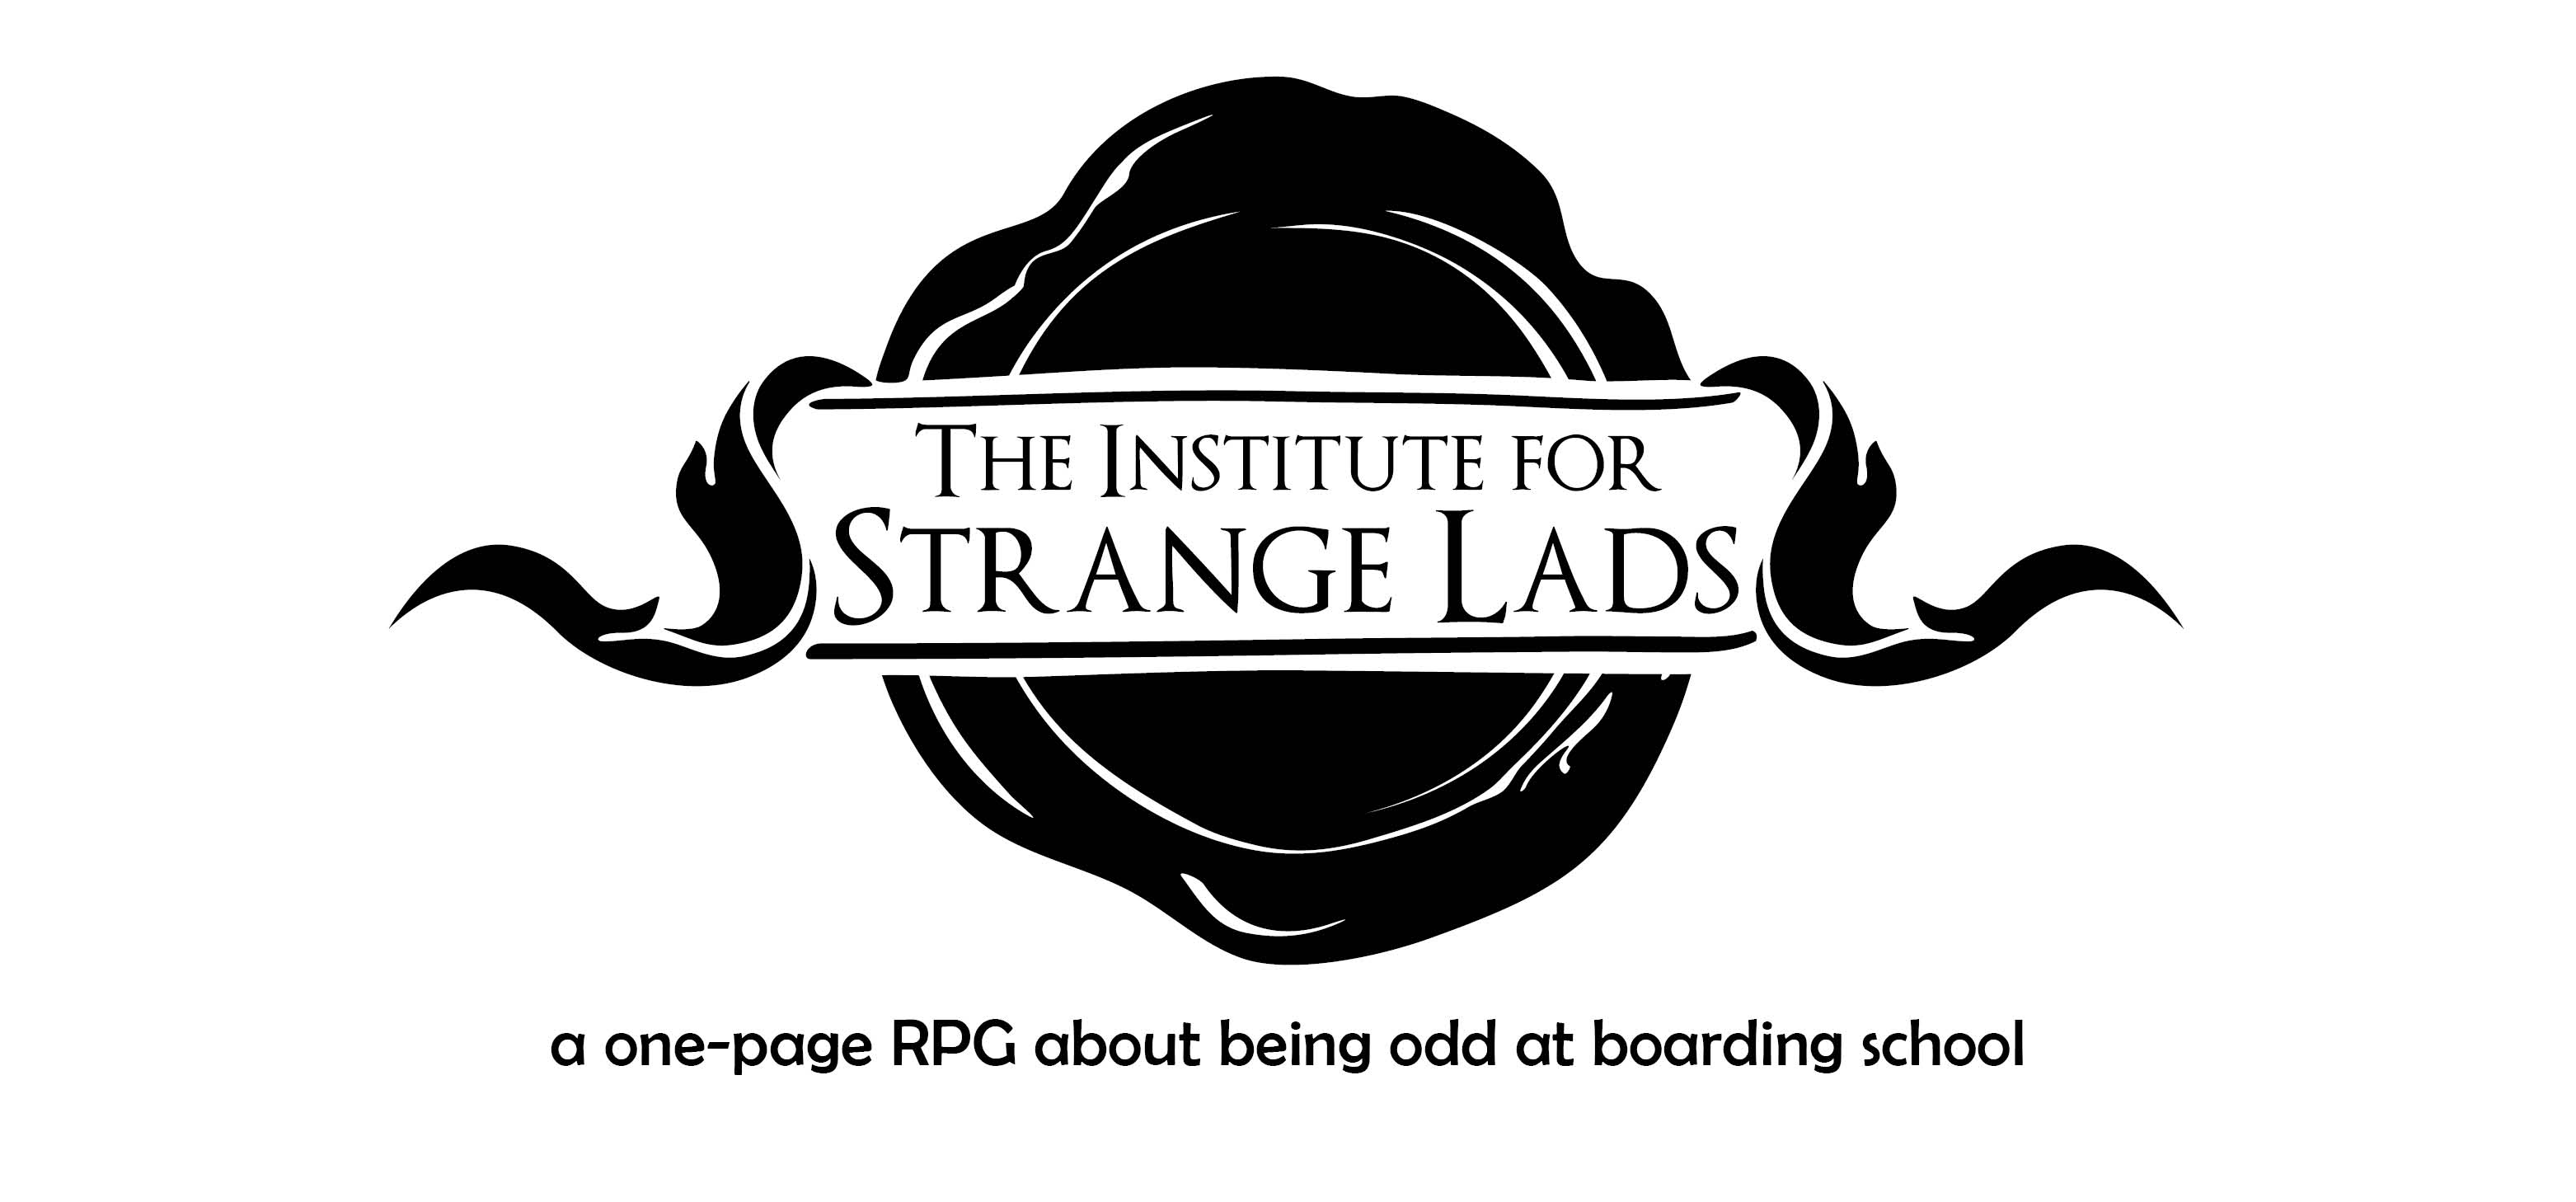 The Institute for Strange Lads